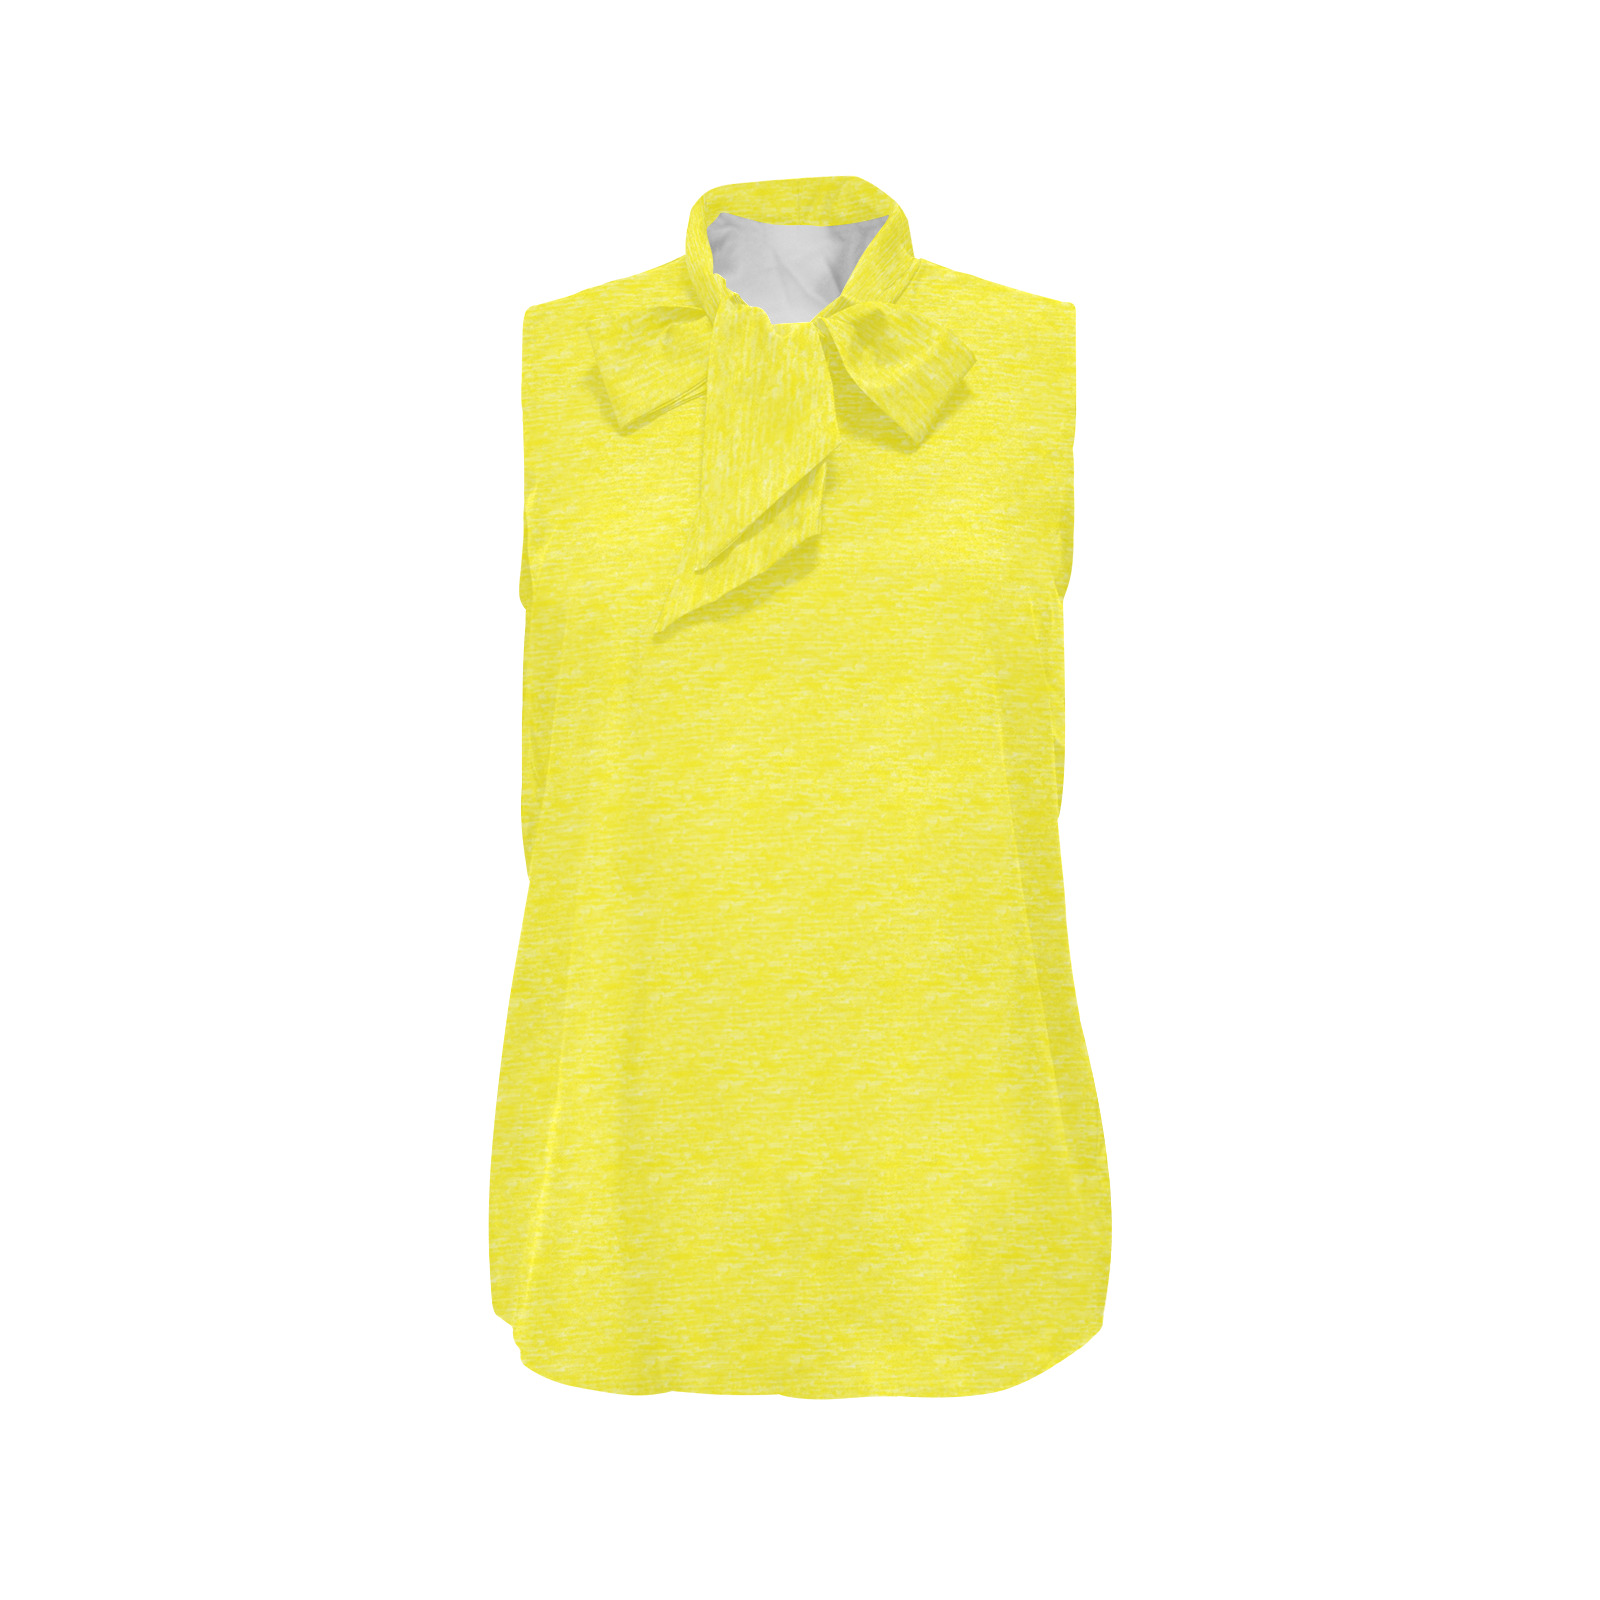 Cloudy Yellow Women's Bow Tie V-Neck Sleeveless Shirt (Model T69)